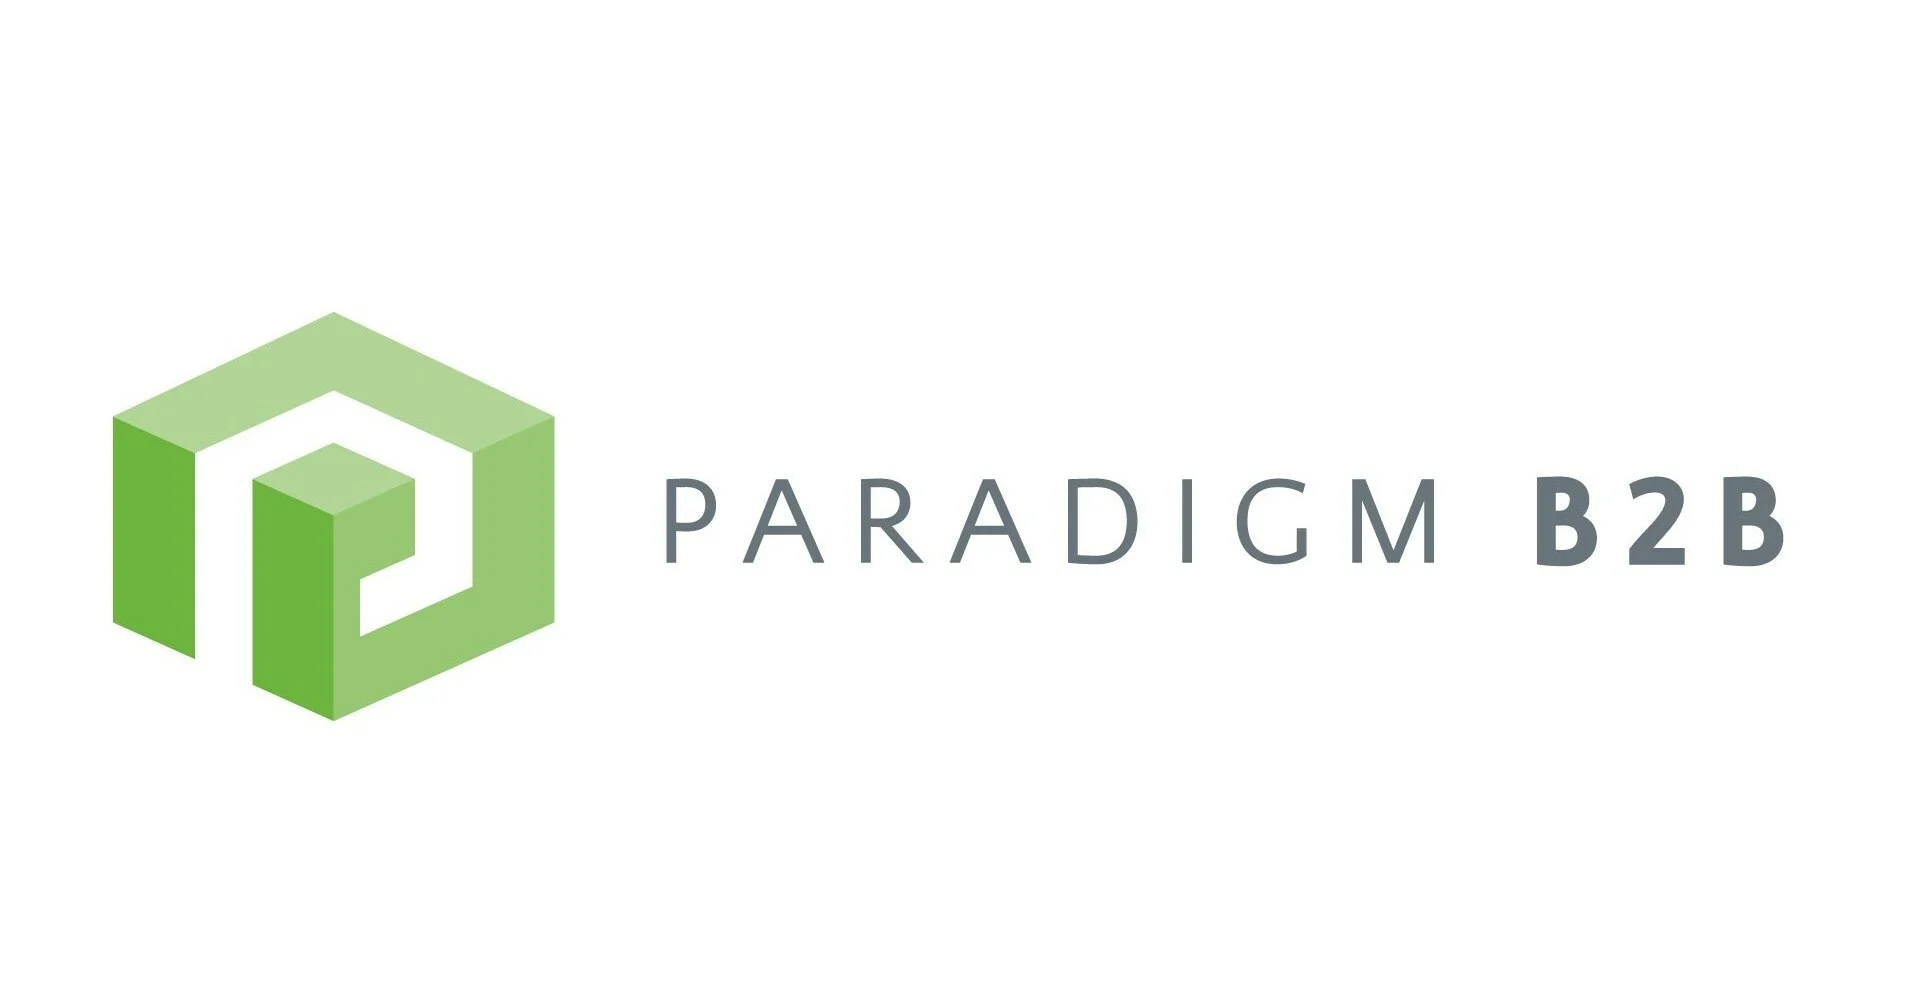 https://www-cdn.bigcommerce.com/assets/Paradigm_B2B_Logo.jpeg